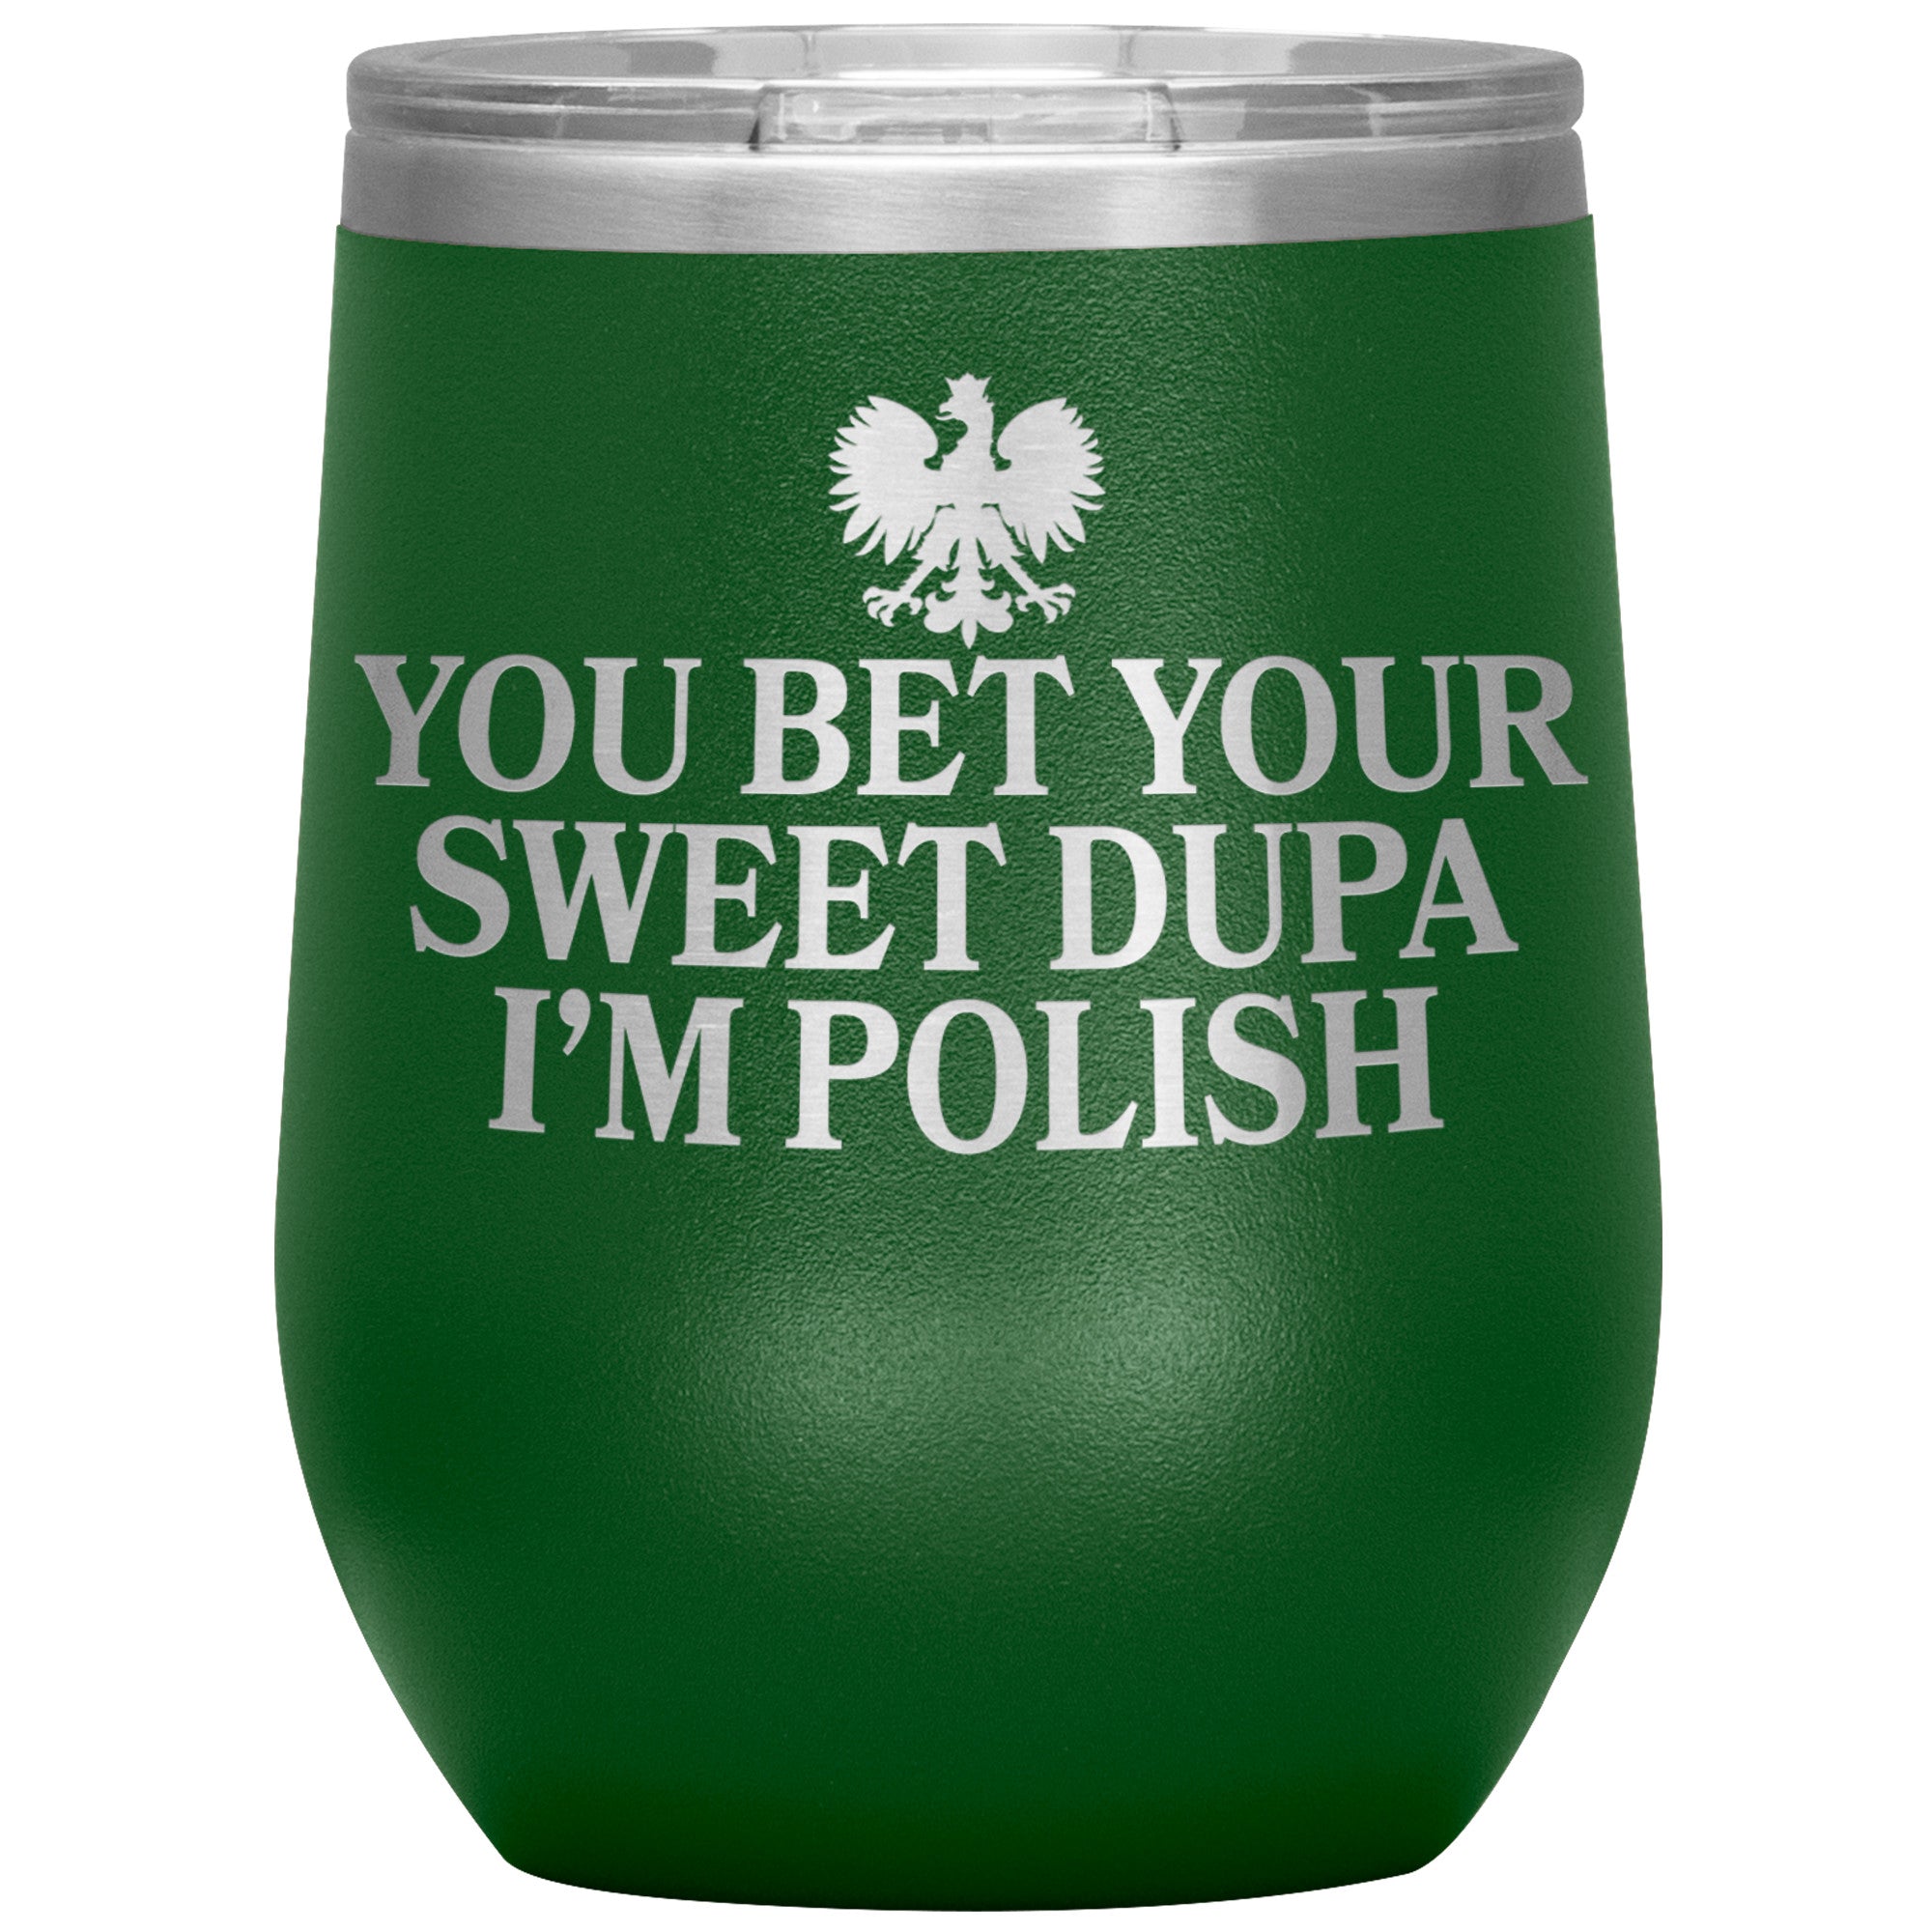 You Bet Your Sweet Dupa I'm Polish Insulated Wine Tumbler Tumblers teelaunch Green  